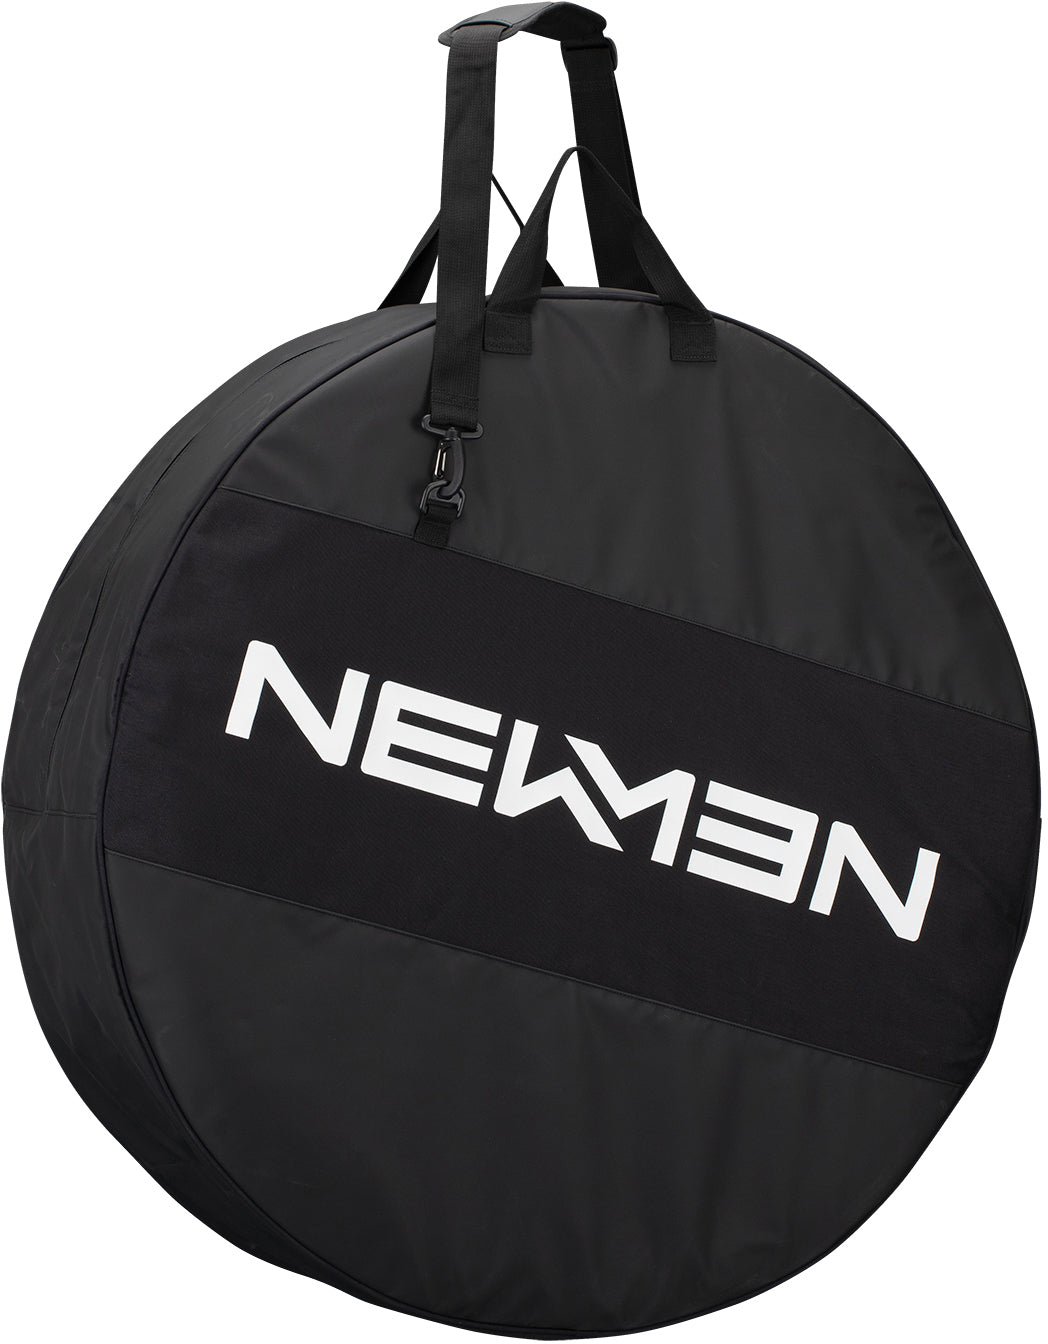 NEWMEN Wheel Bag